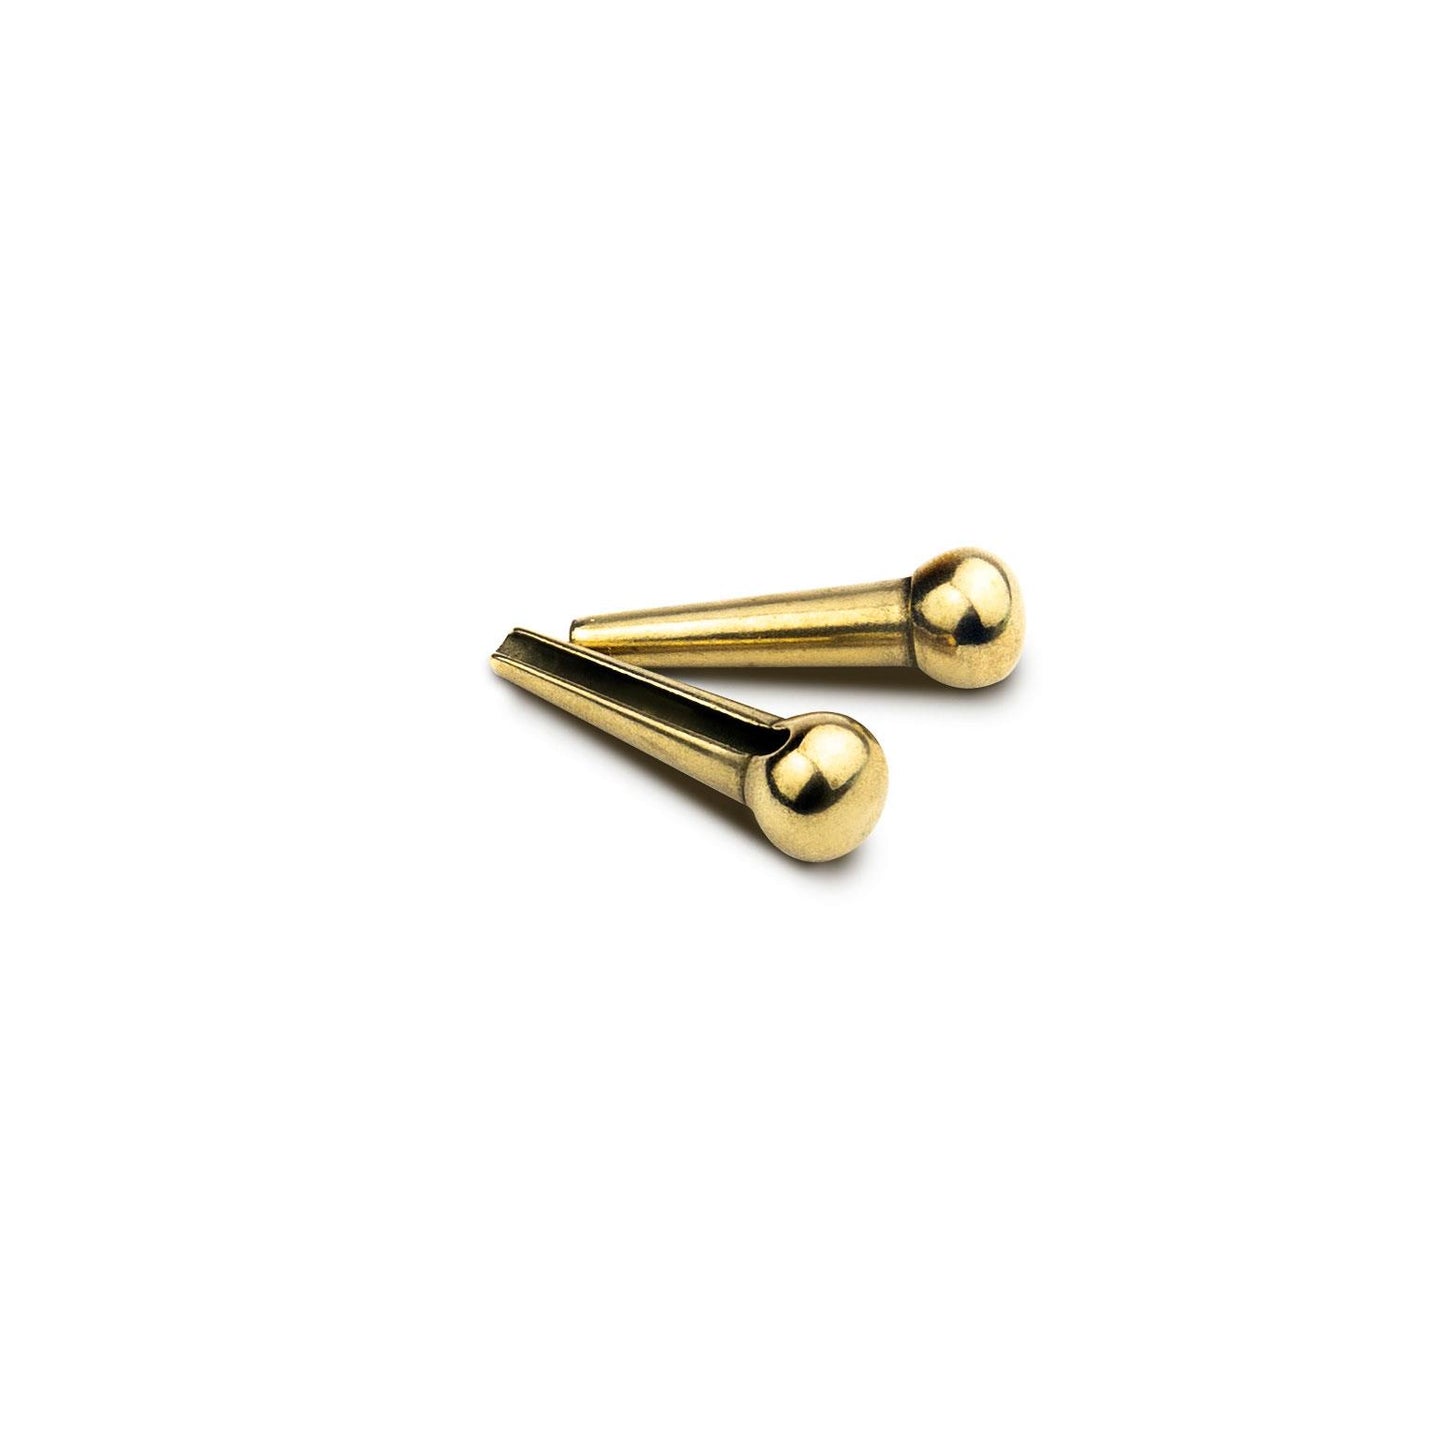 6 Pcs Solid Brass Bridge Pins for Acoustic Guitar